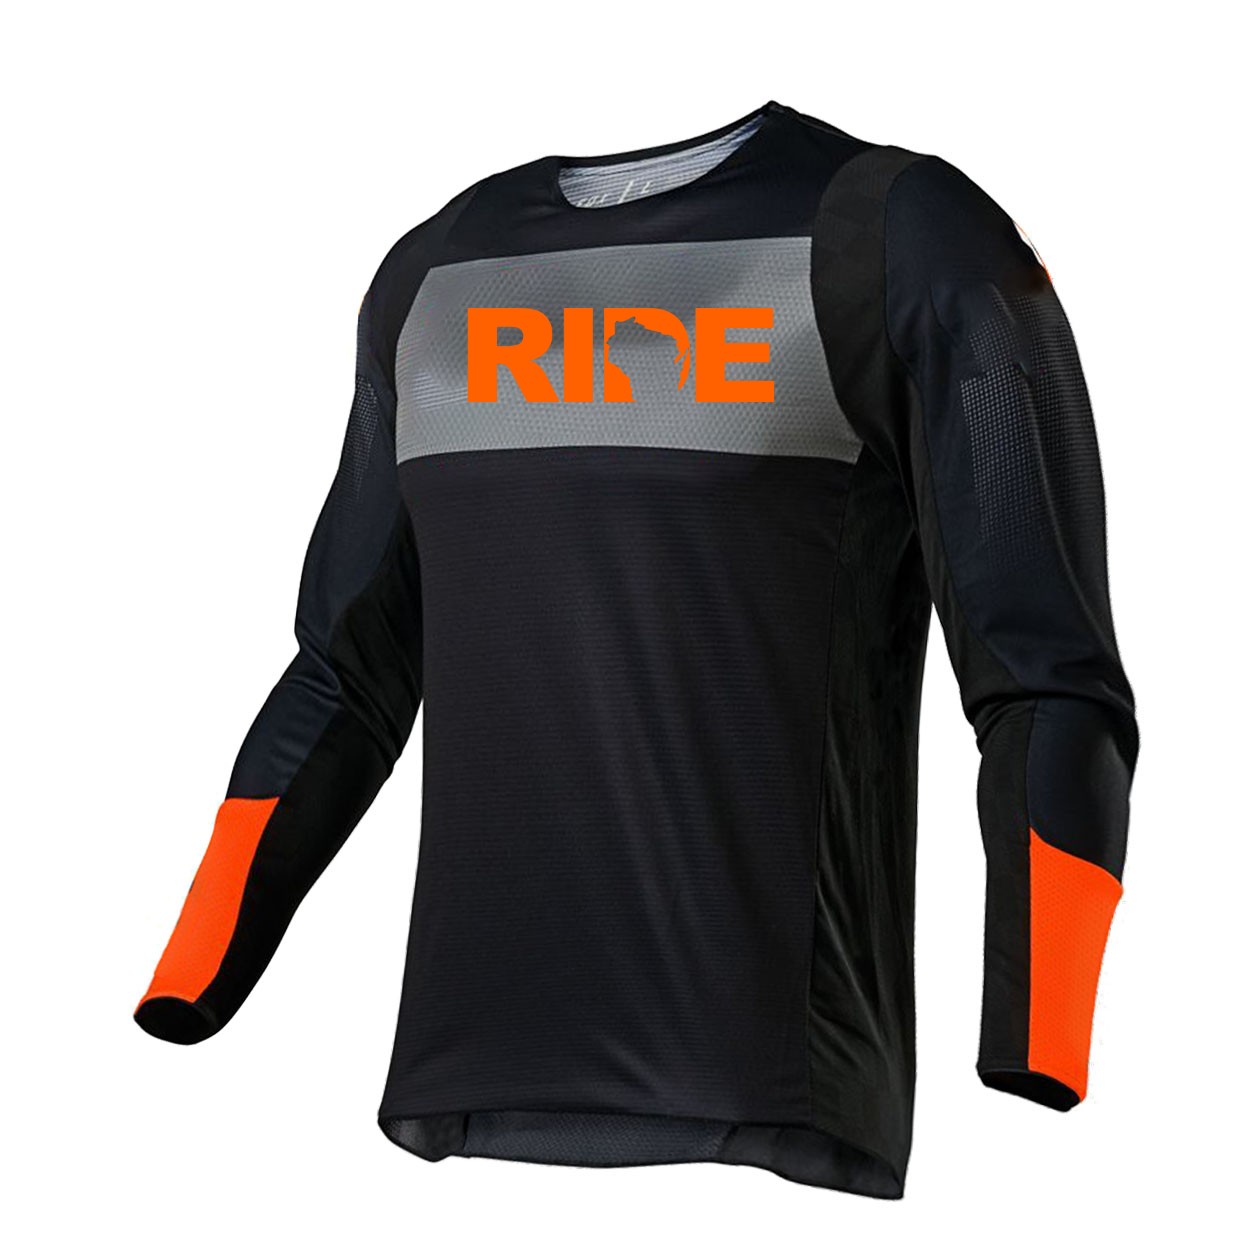 Ride Wisconsin Classic Performance Jersey Long Sleeve Shirt Black/Gray/Orange (Orange Logo)